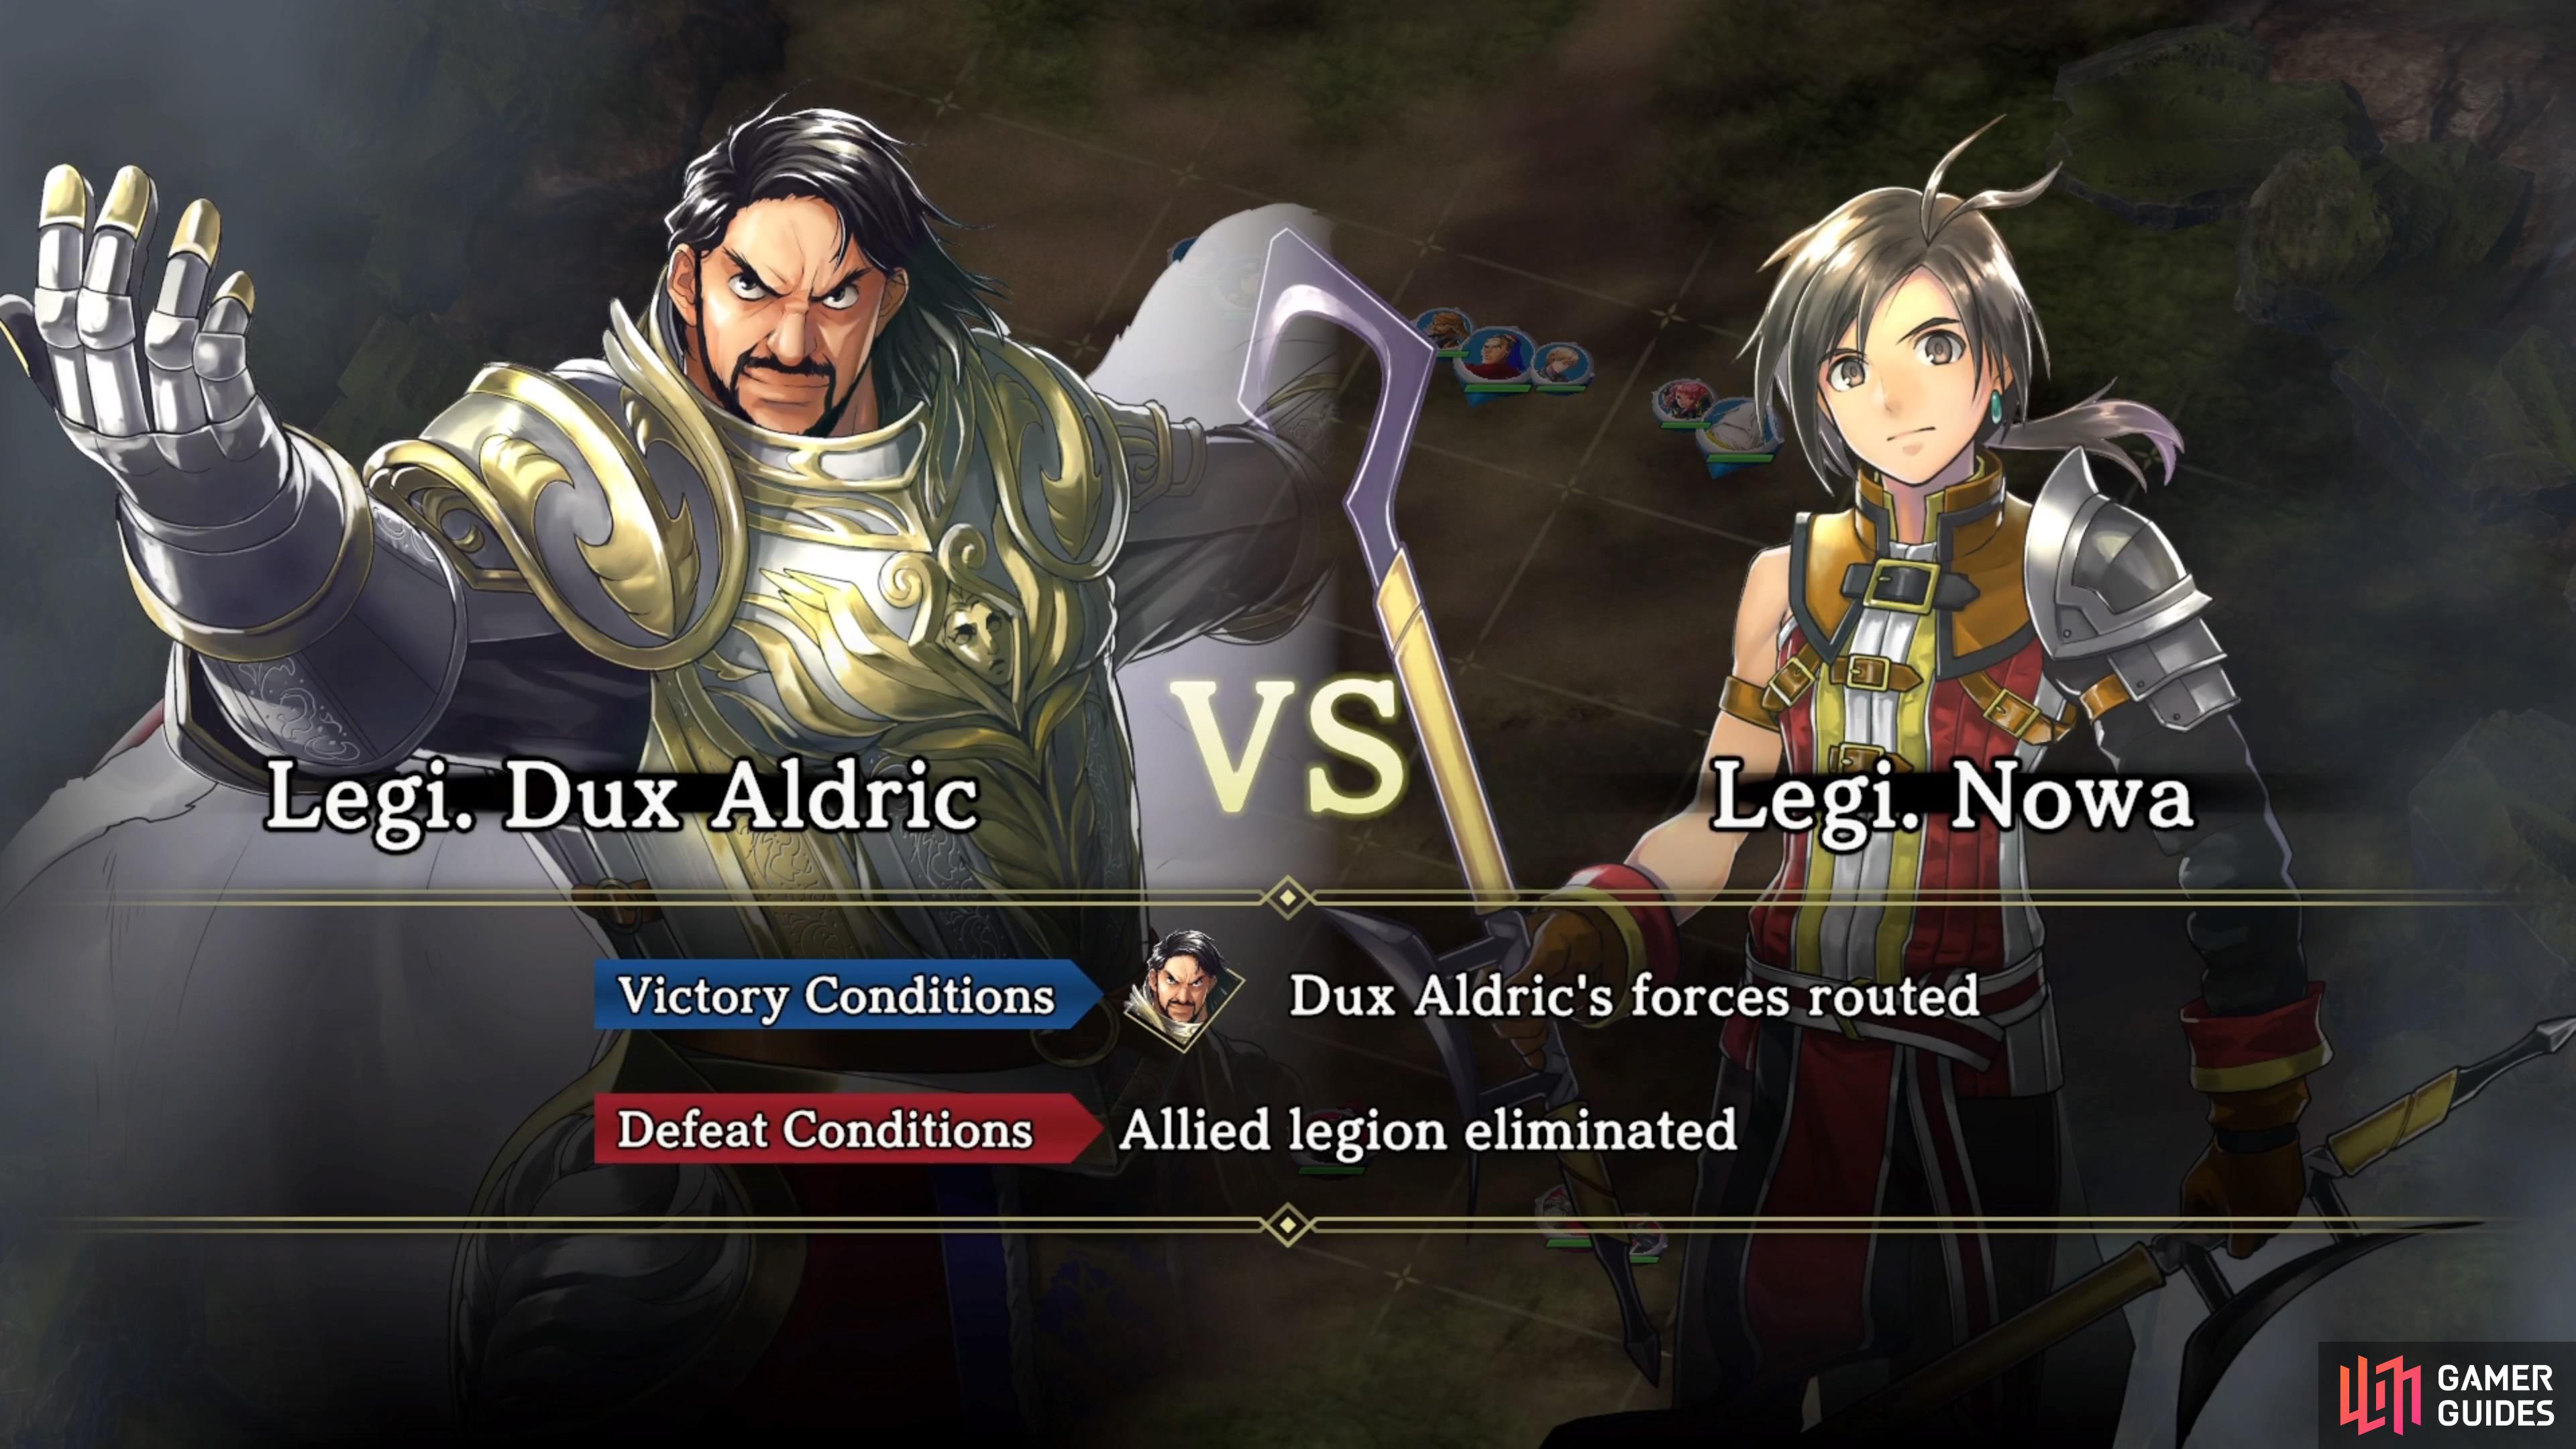 This war battle will pit you against Dux Aldric.